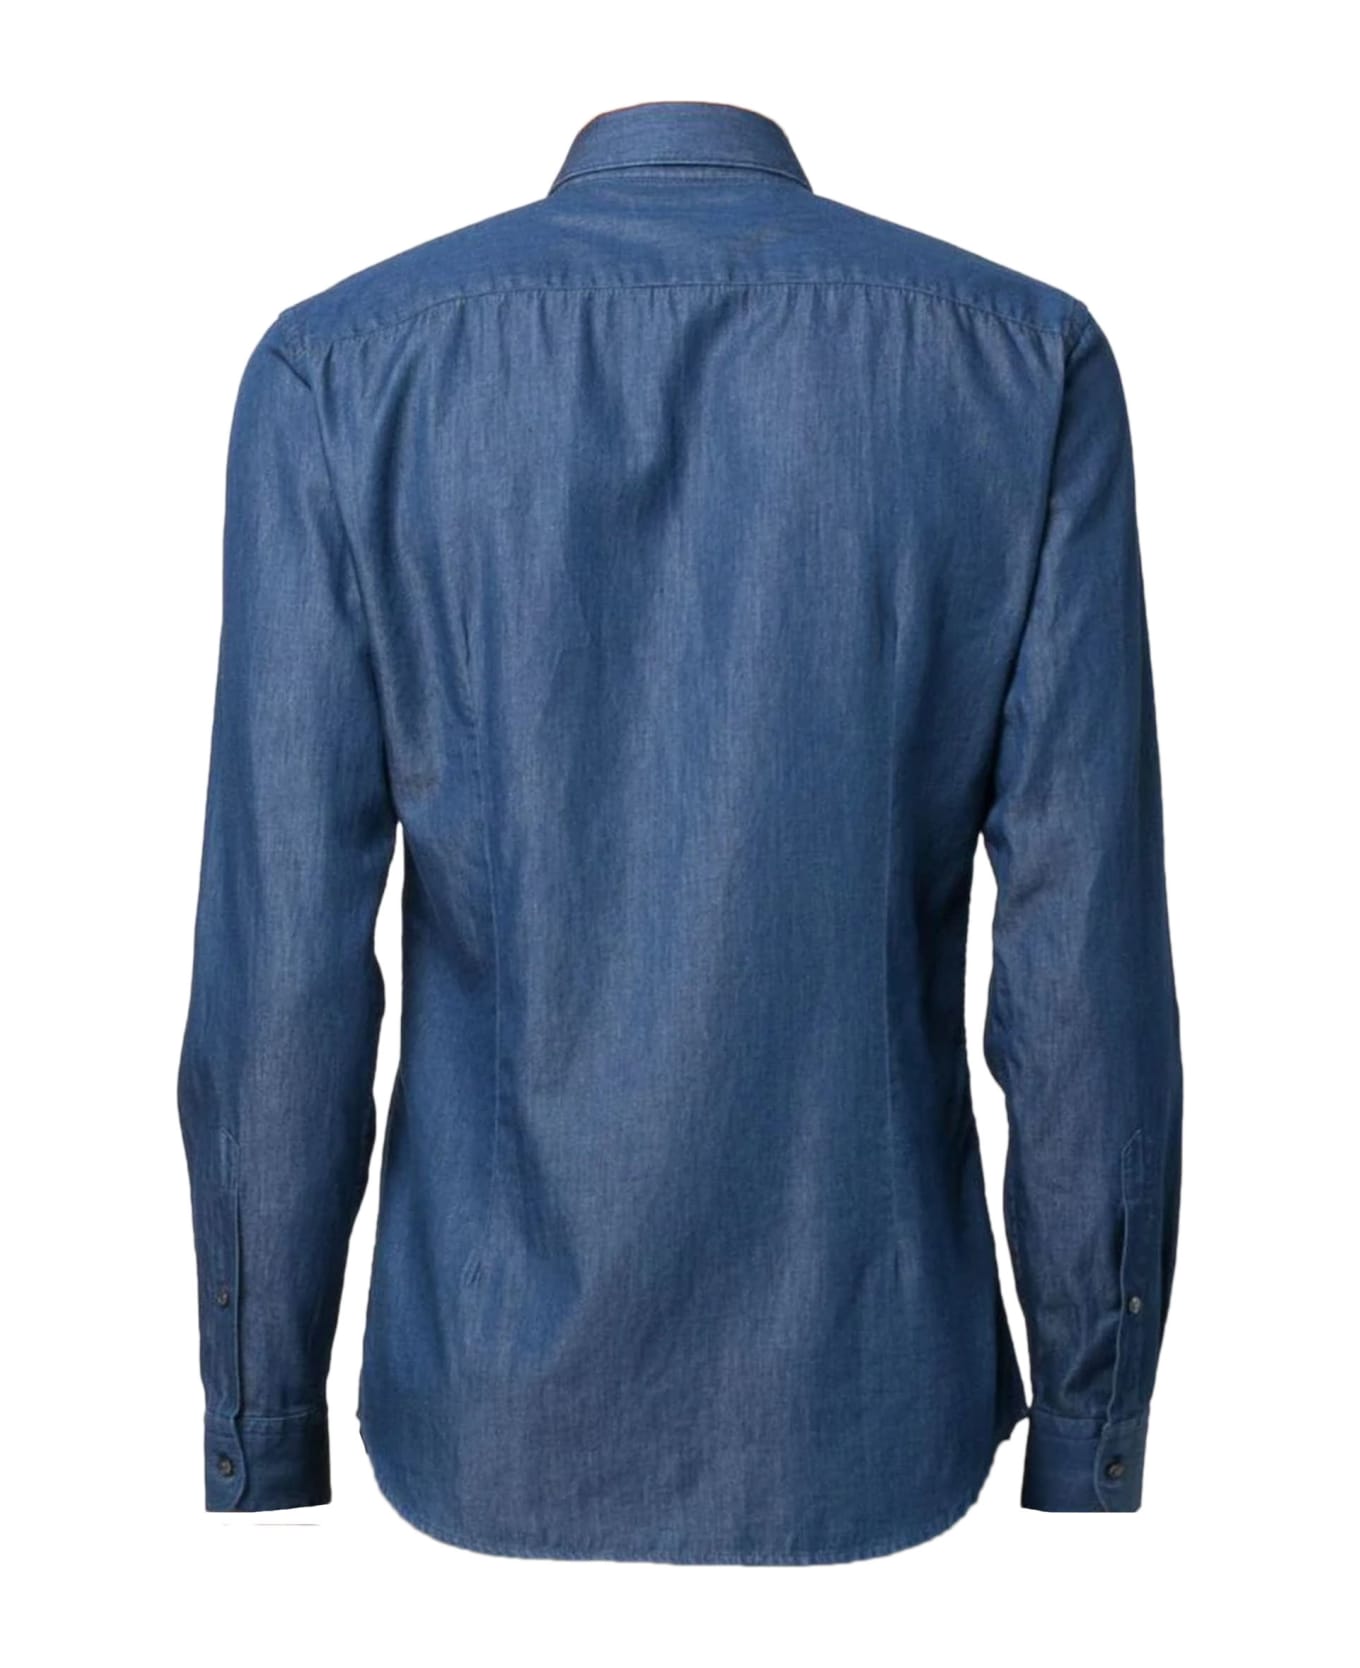 Fay Navy Blue Cotton Denim Shirt - Blue シャツ